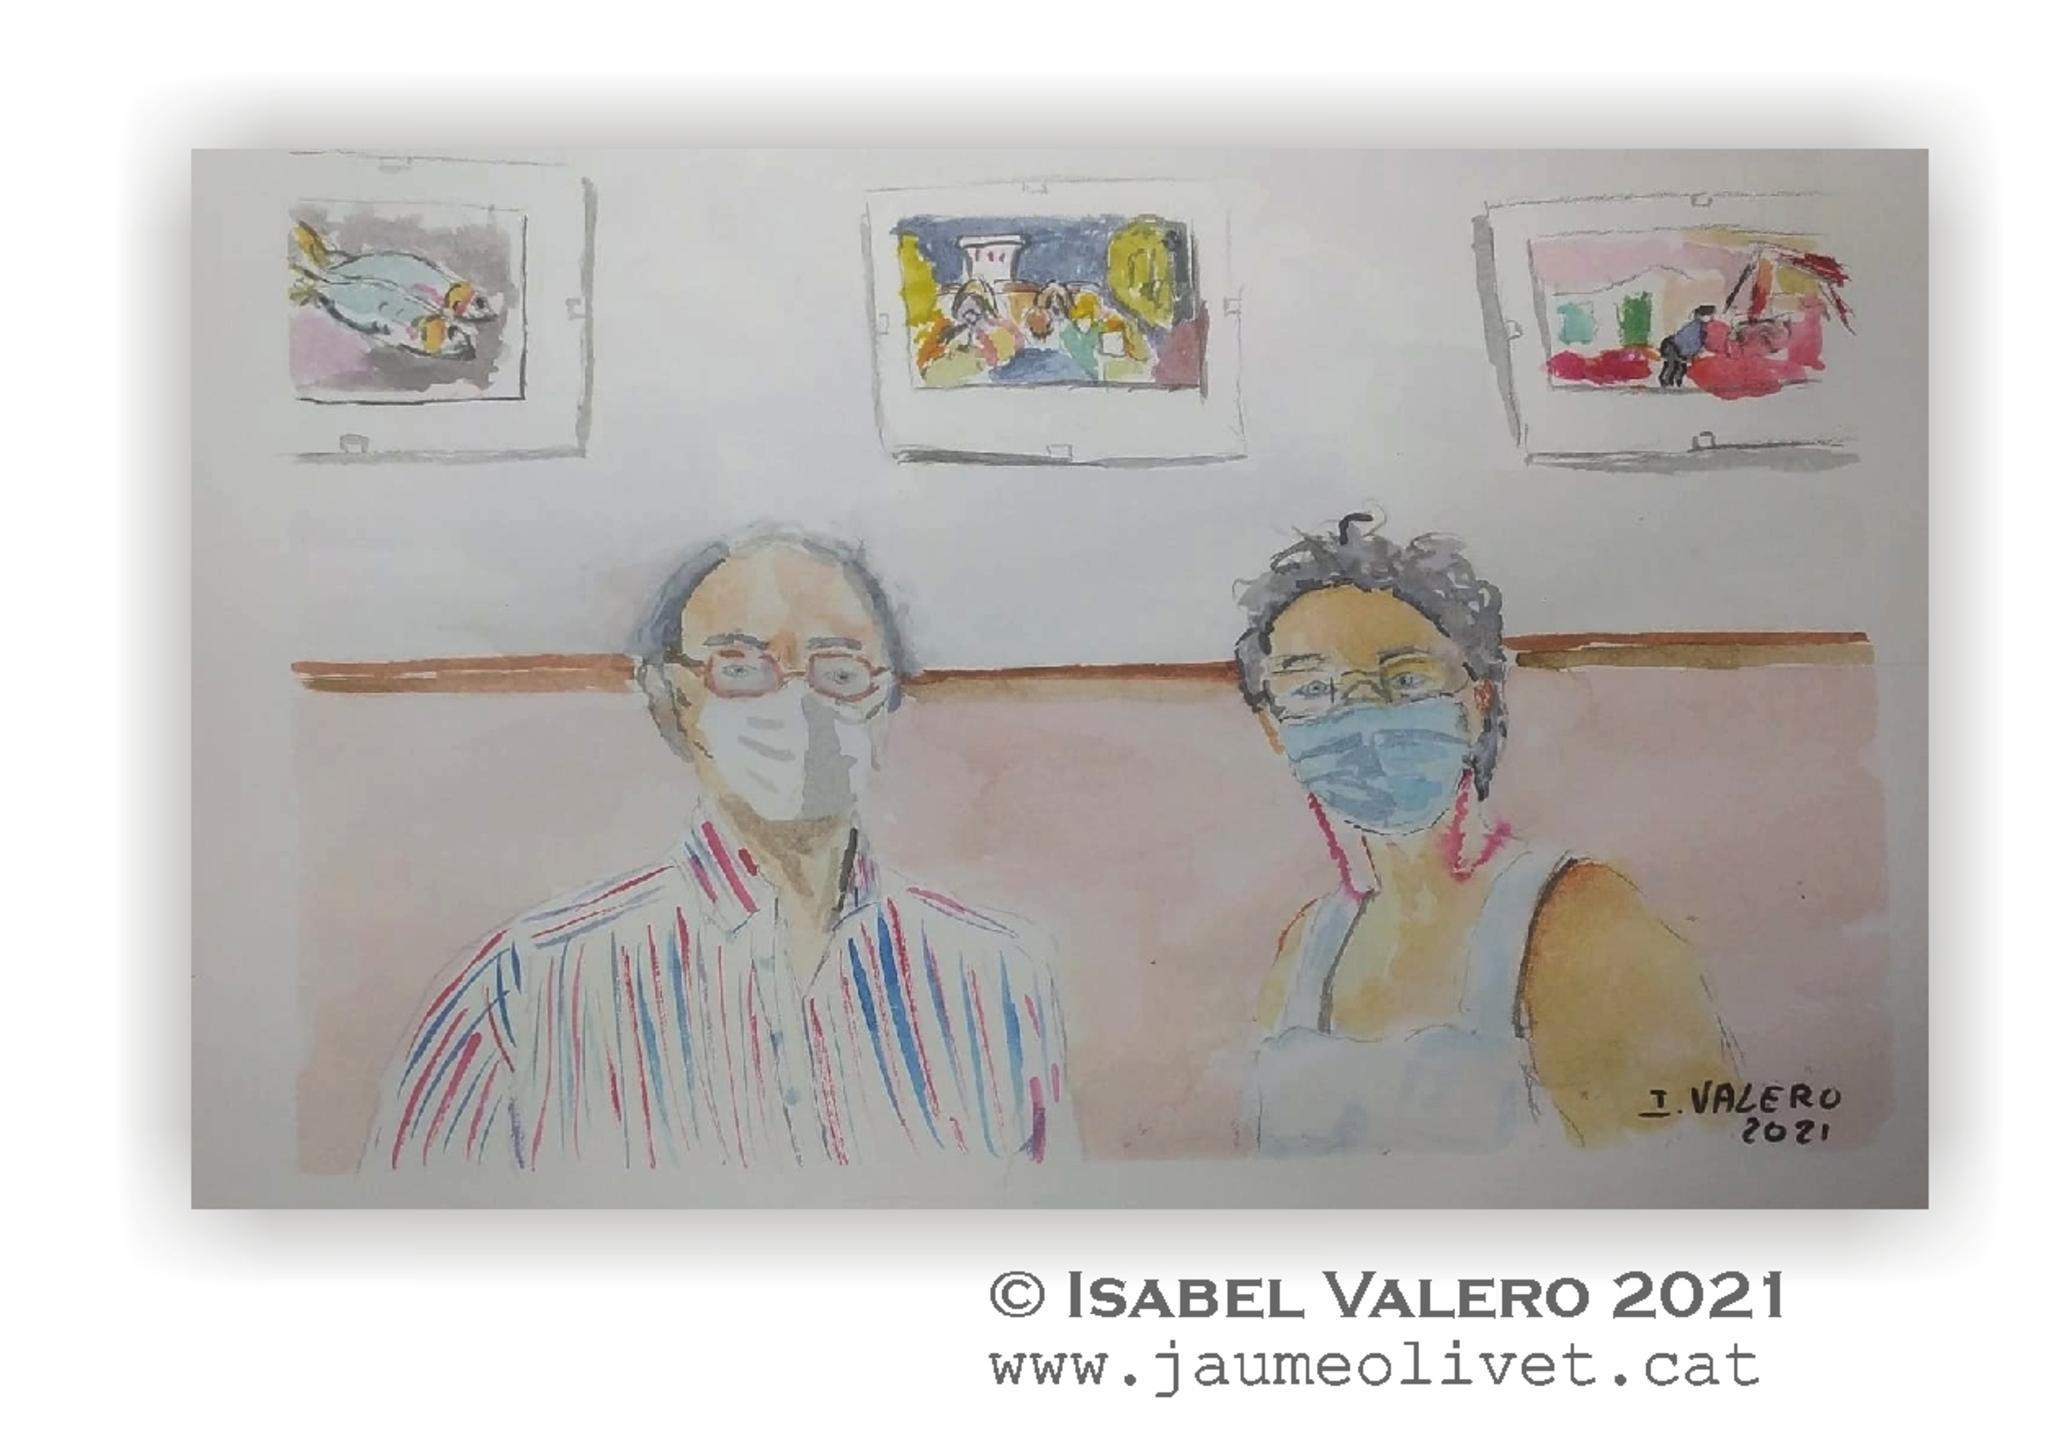  Isabel Valero 2021